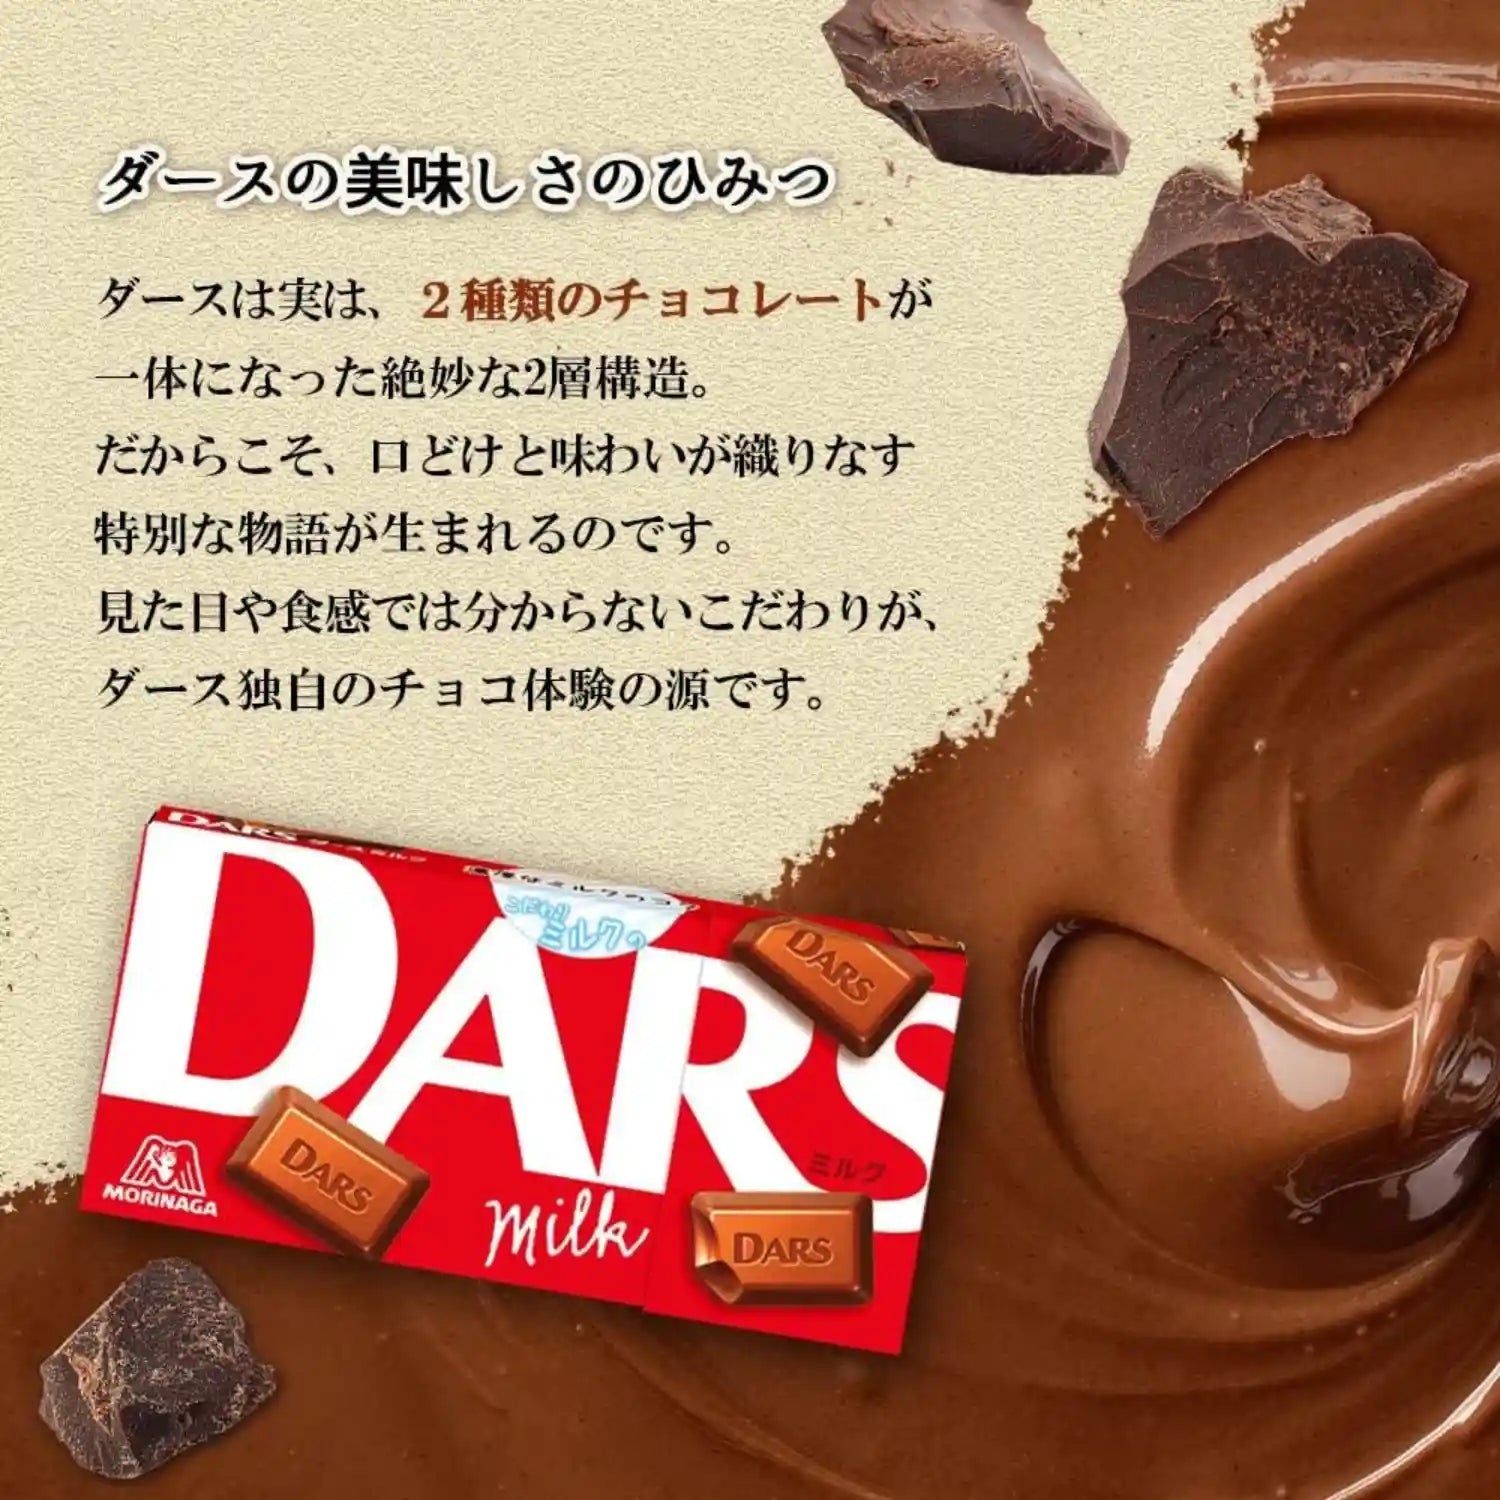 Morinaga Dars Milk Chocolate (12 Pieces) - Buy Me Japan